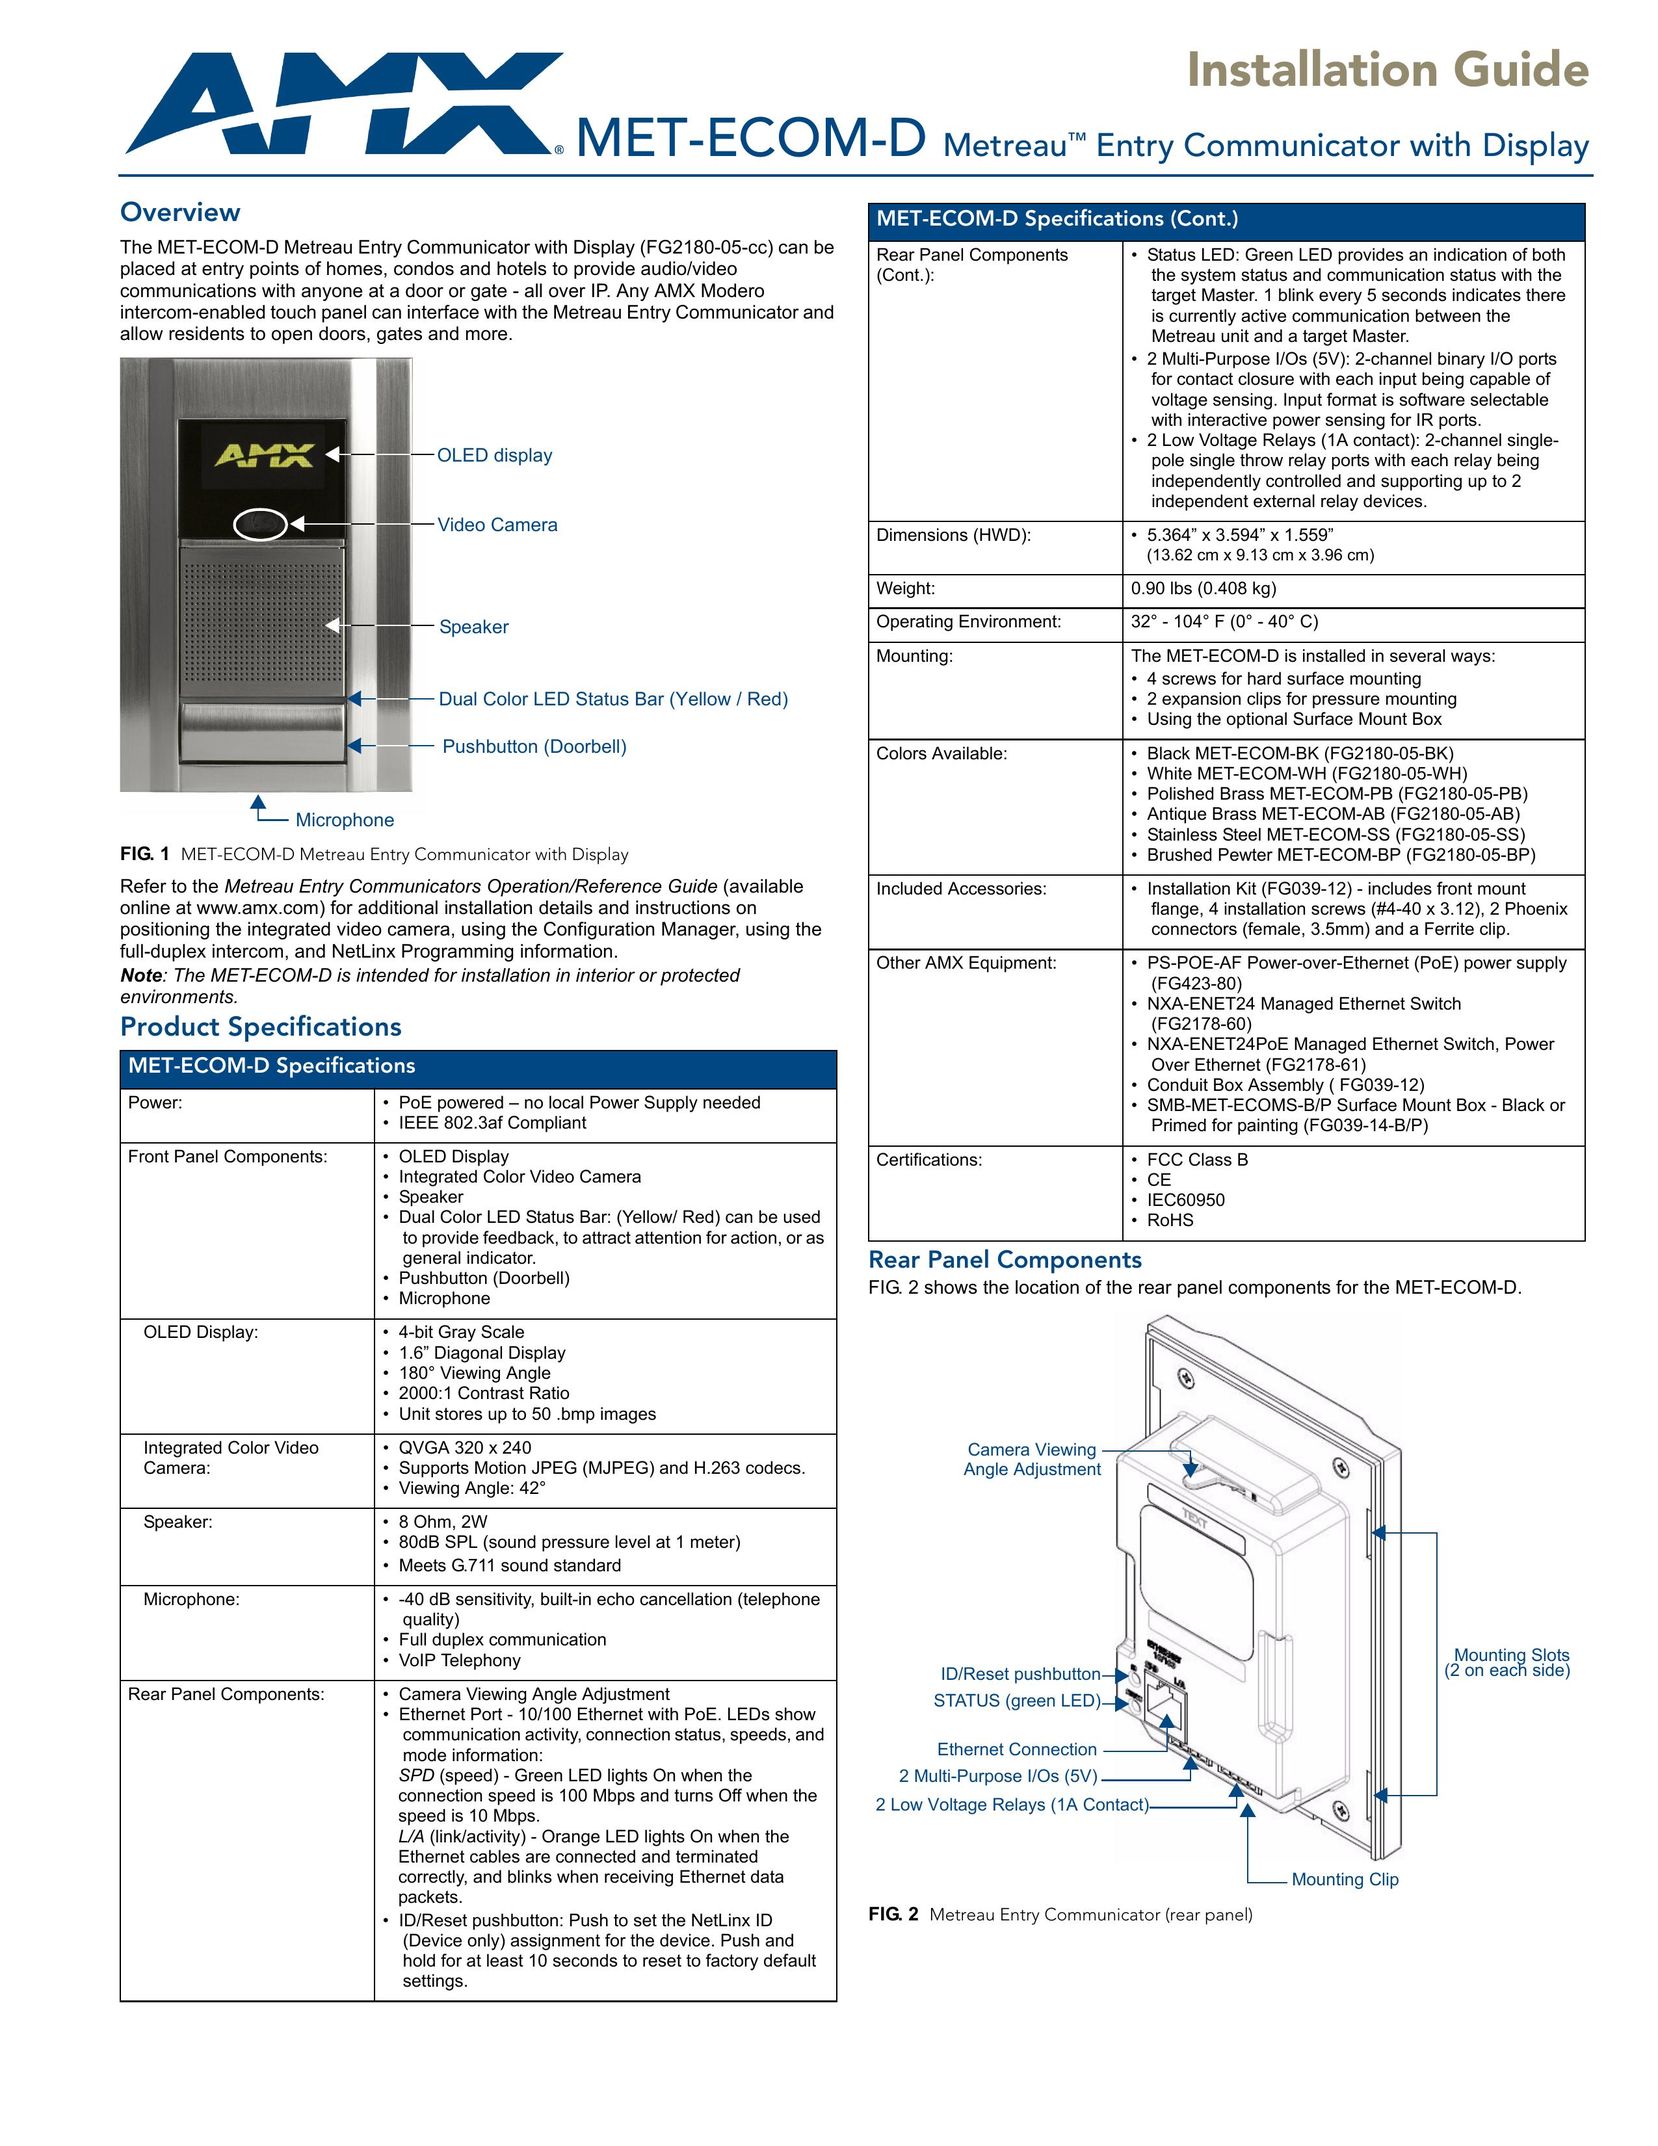 AMX MET-ECOM-D Home Security System User Manual